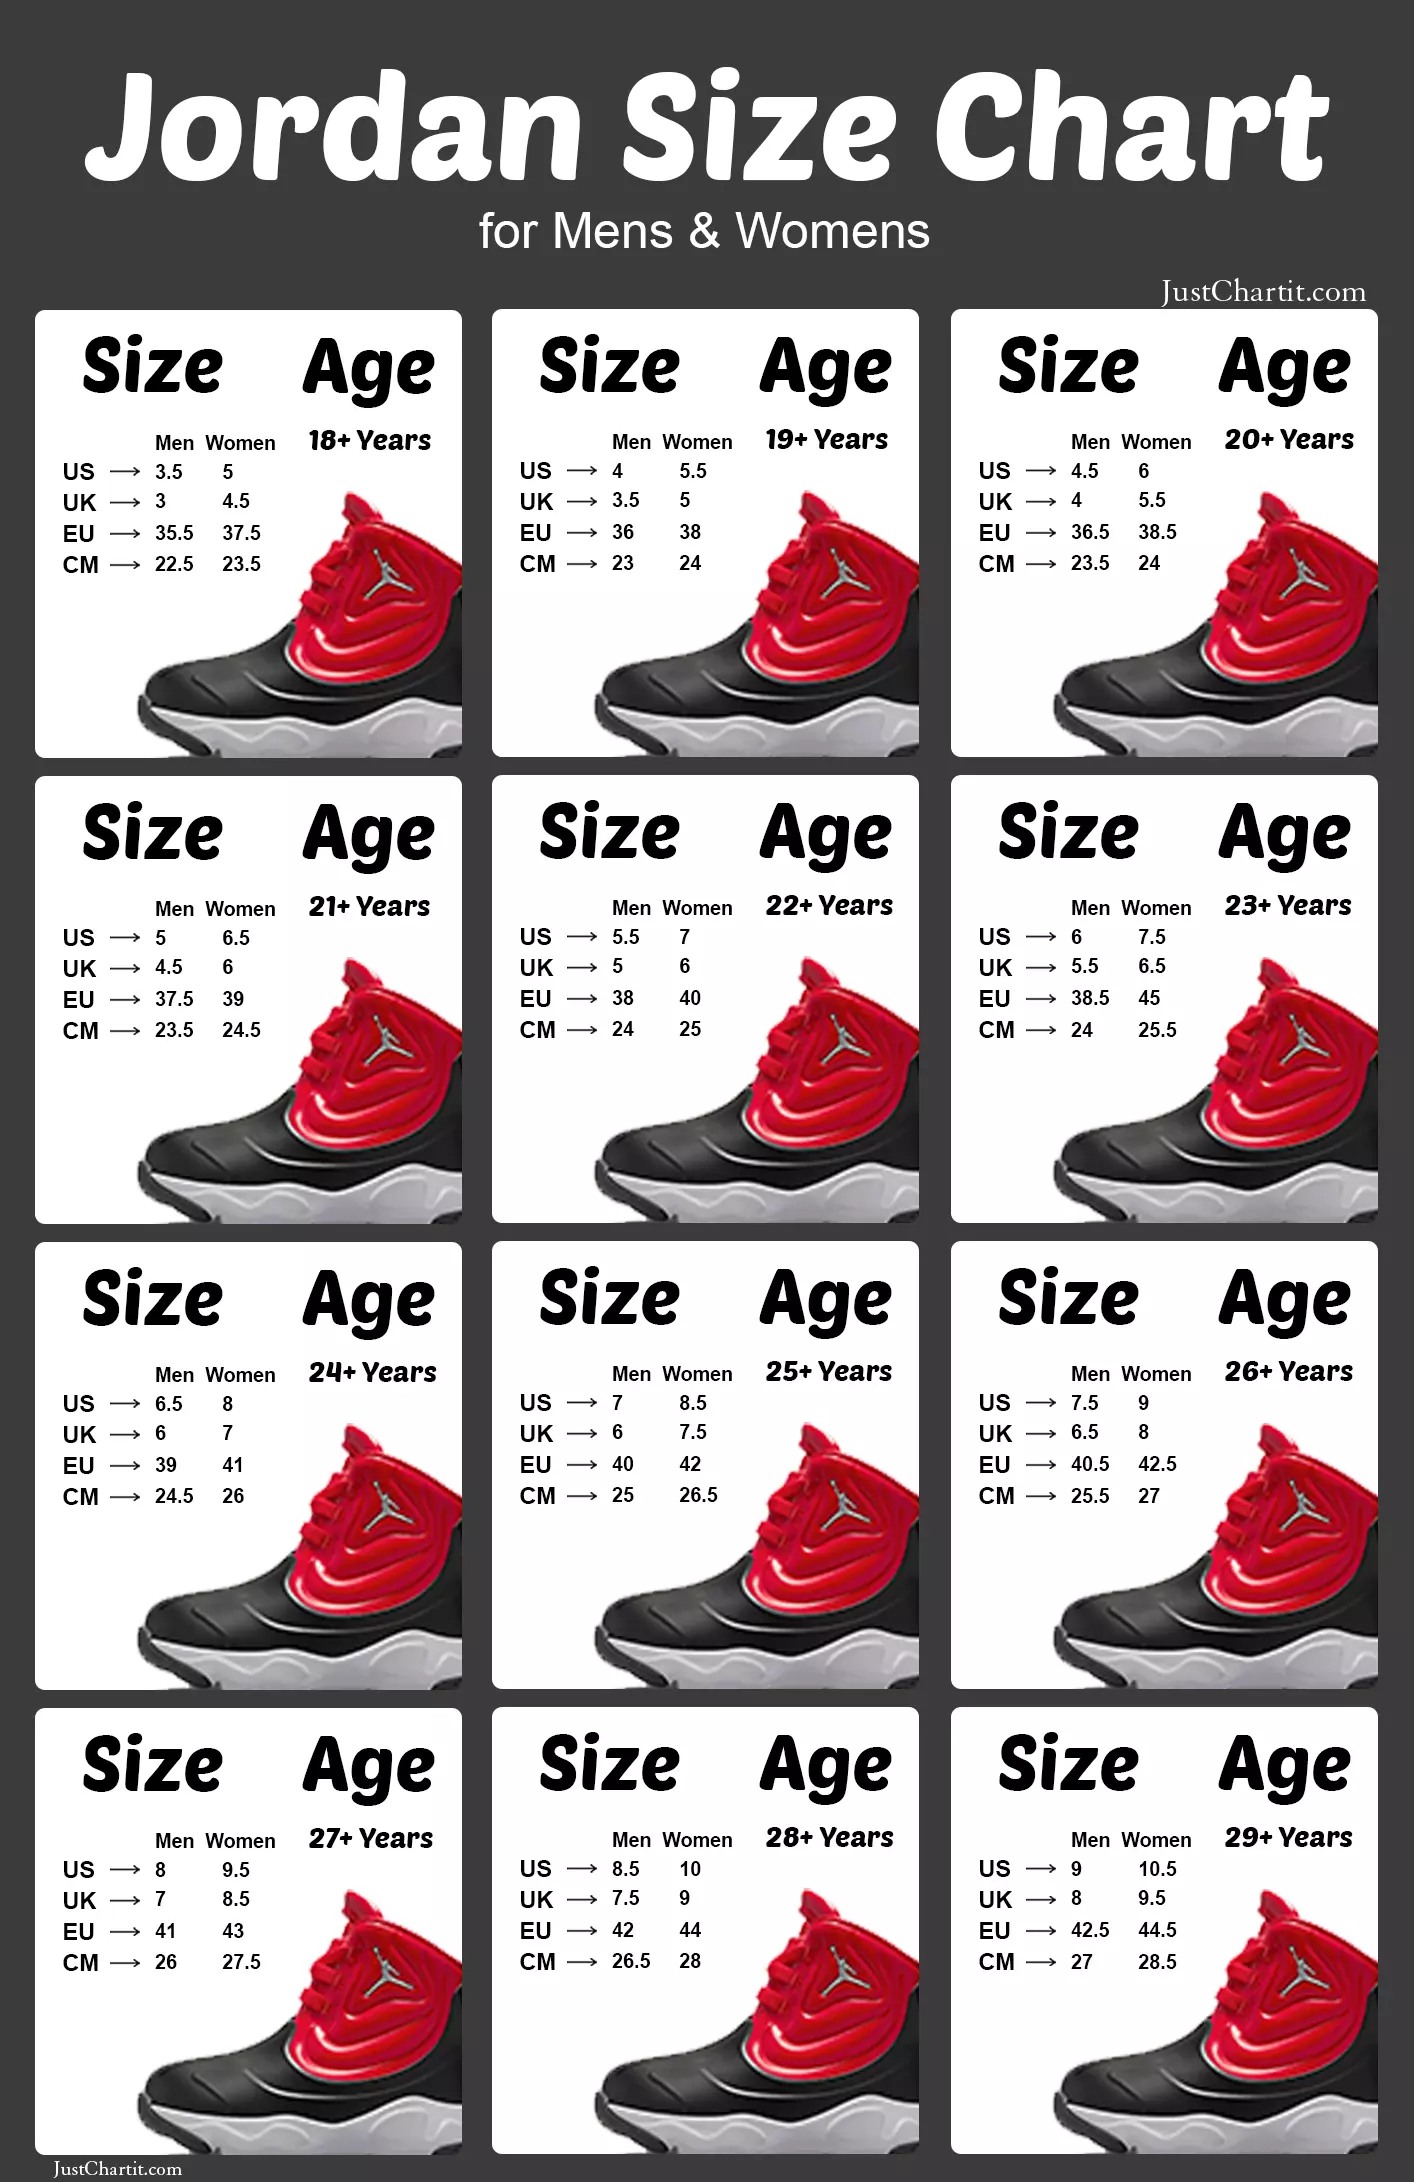 shallow stockings means Jordan Size Chart - Men & Women Size Guide